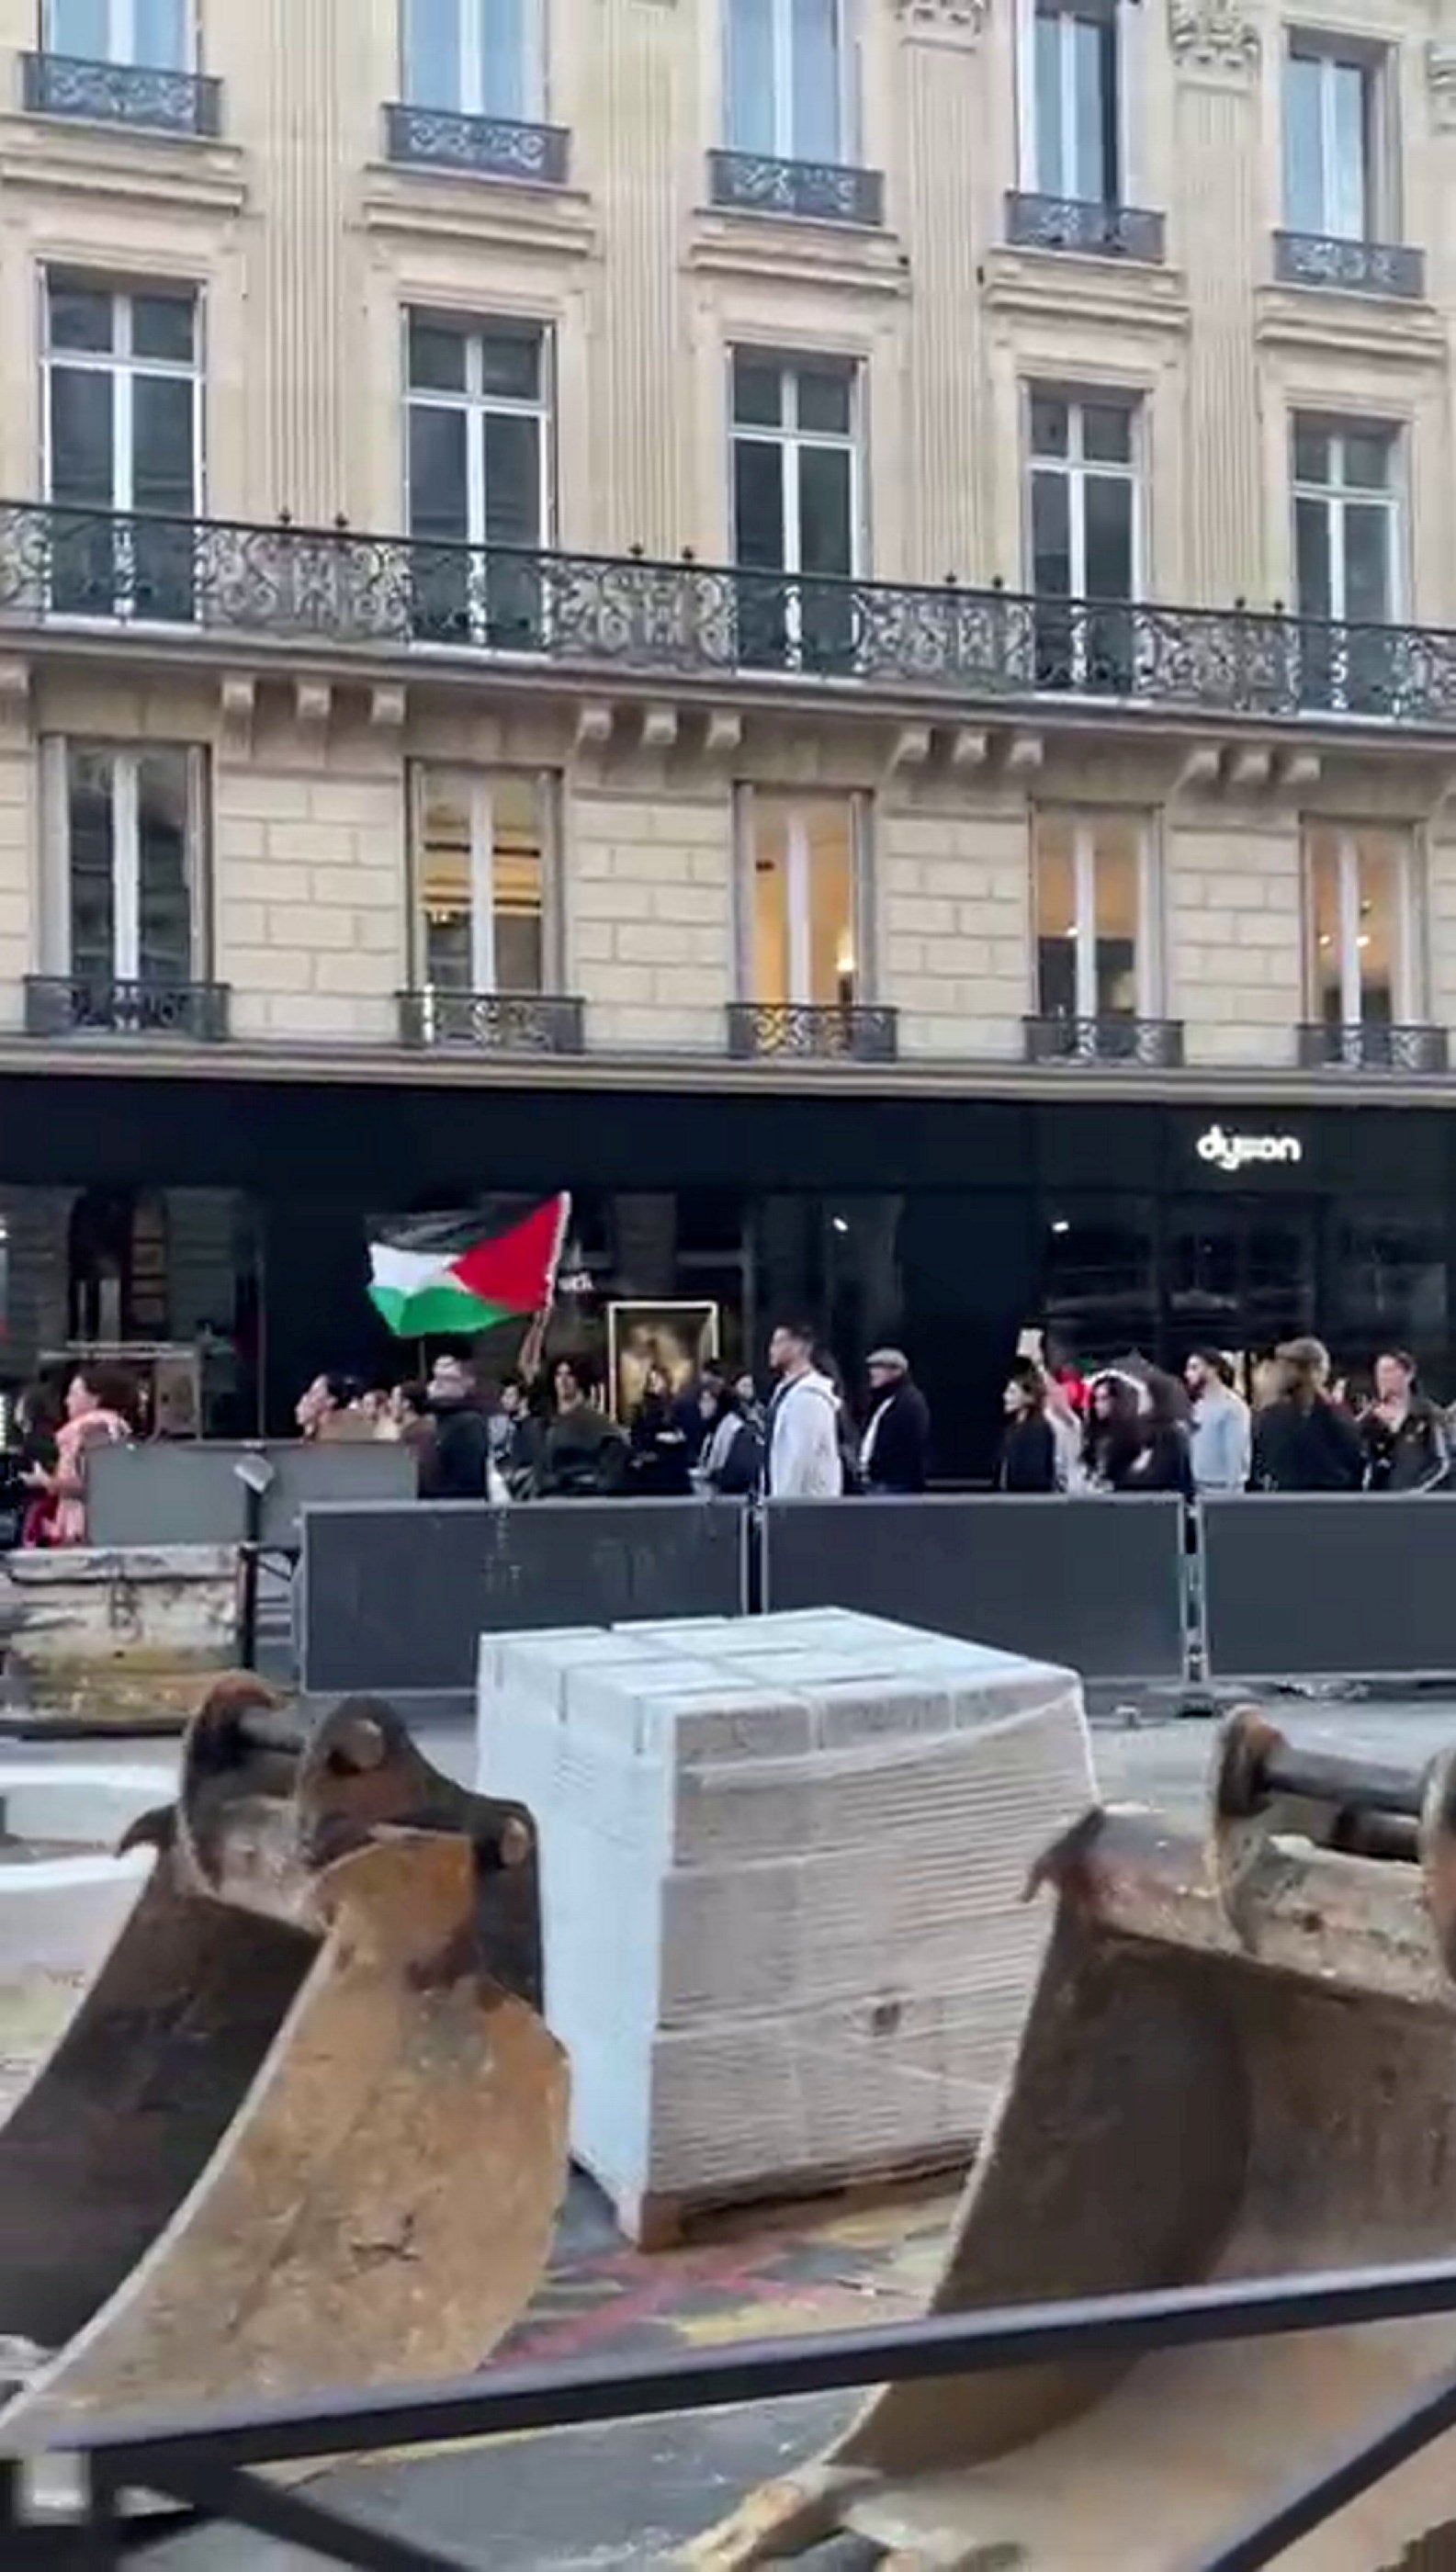 The pro-Palestine protest in Paris